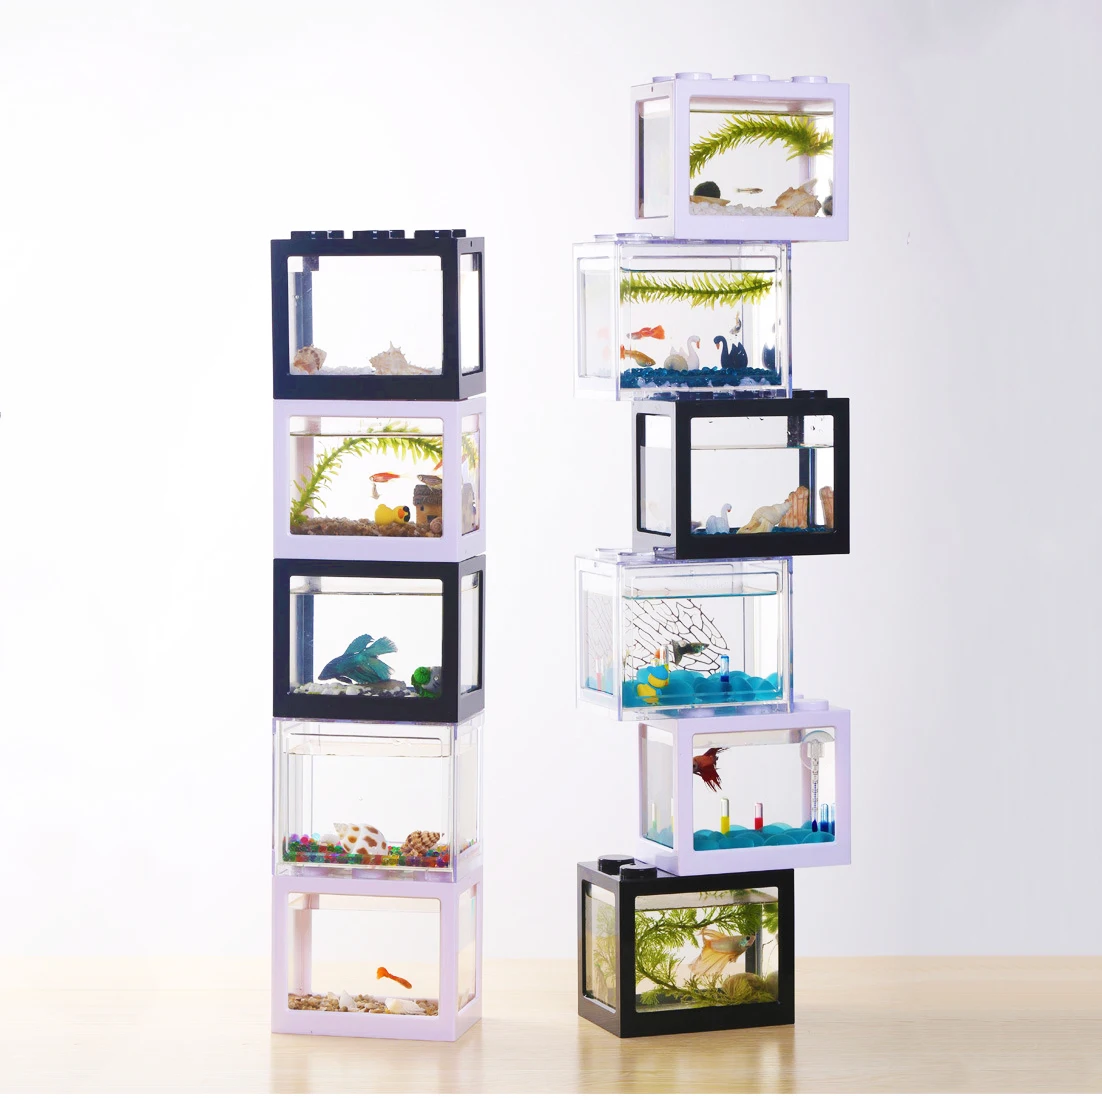 Desktop-Small-Fish-Aquatic-Pets-guppy-Tank-Fighting-Fish-Tank-Creative-Plastic-Building-Block-Fish-Water.jpg